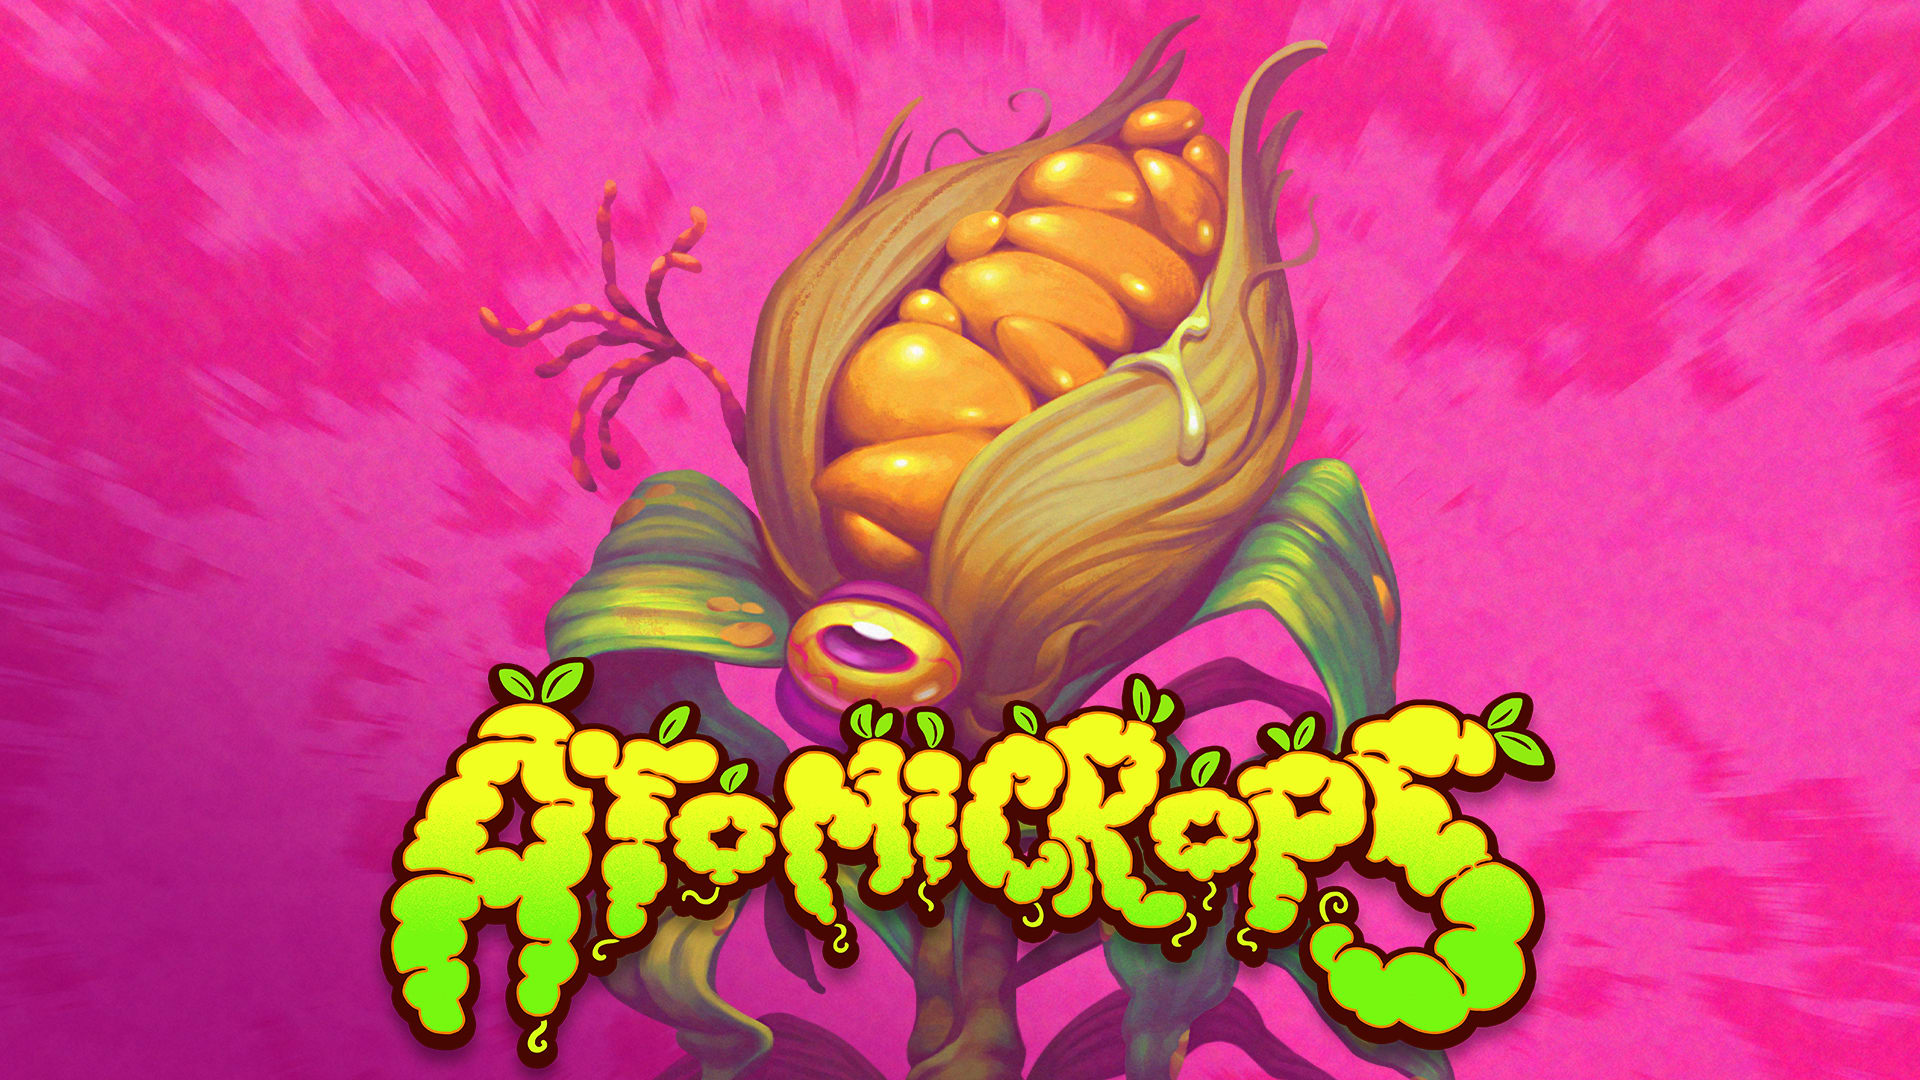 Atomicrops (Nintendo Switch Digital Download) $5.99